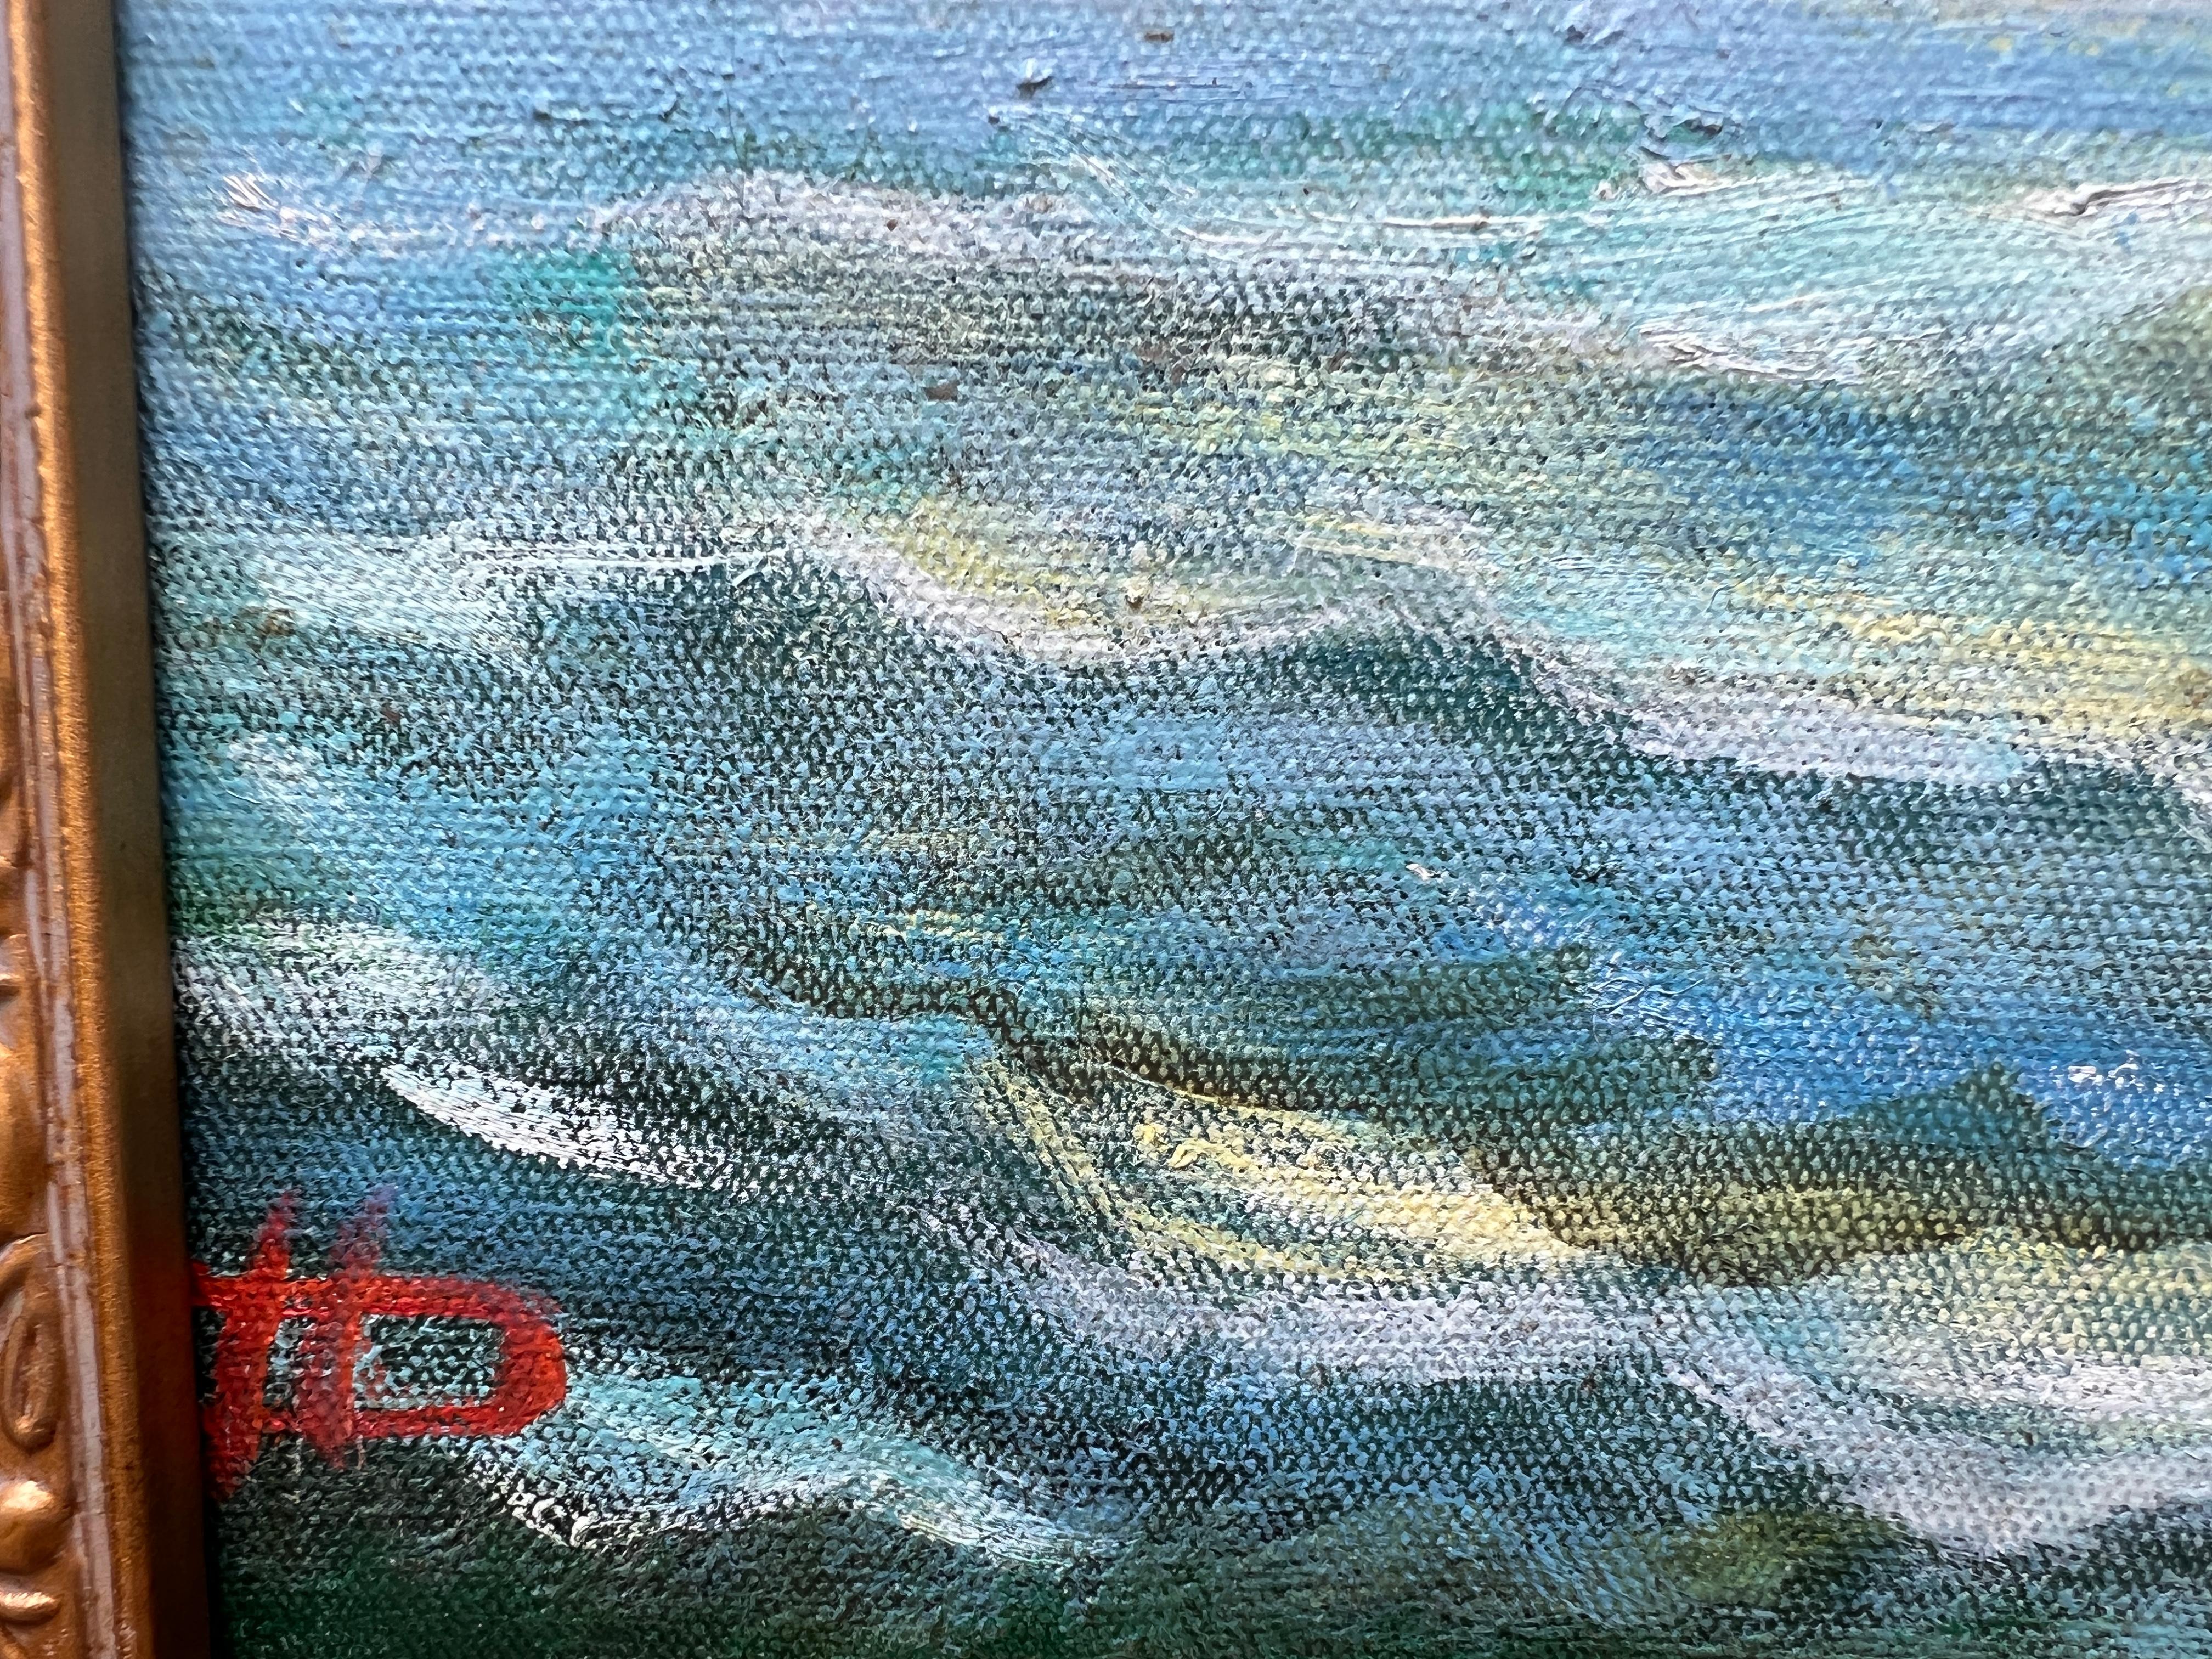 Artist Dobritsin Oil painting on canvas, seascape, Sailing ship, Framed For Sale 3